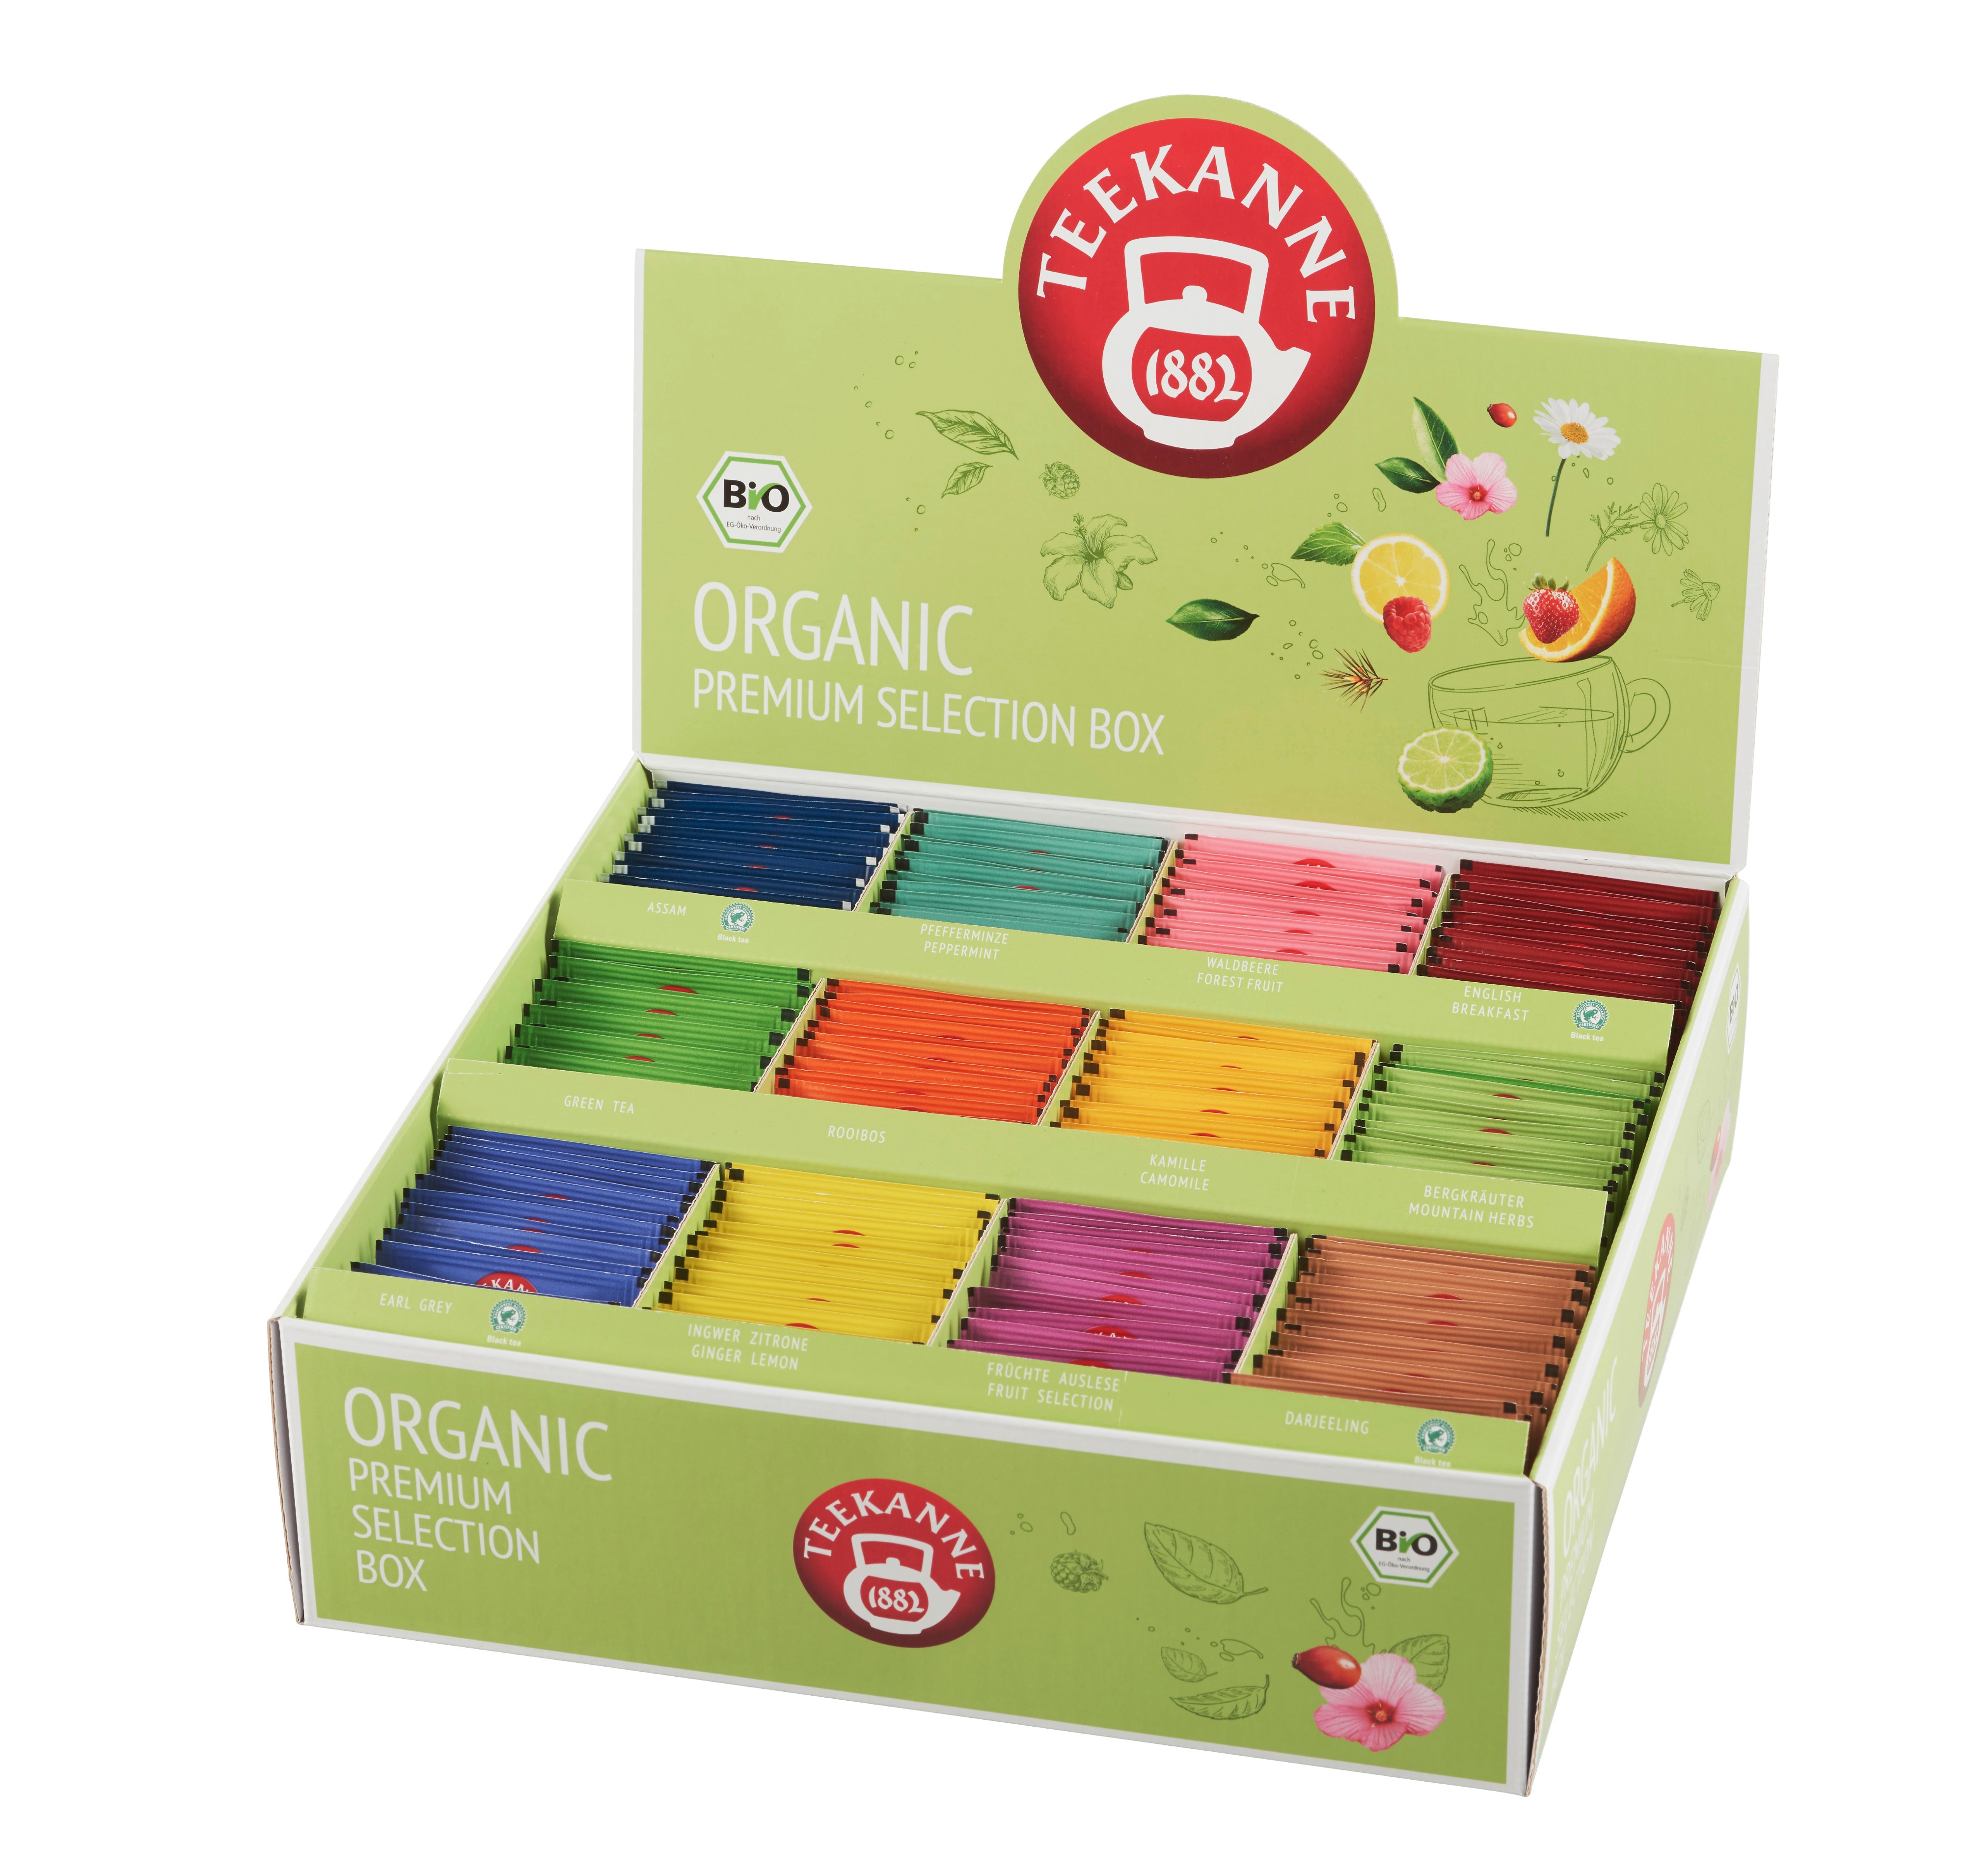 Teekanne BIO Organic Premium Selection Box, Inhalt: 180 Beutel.